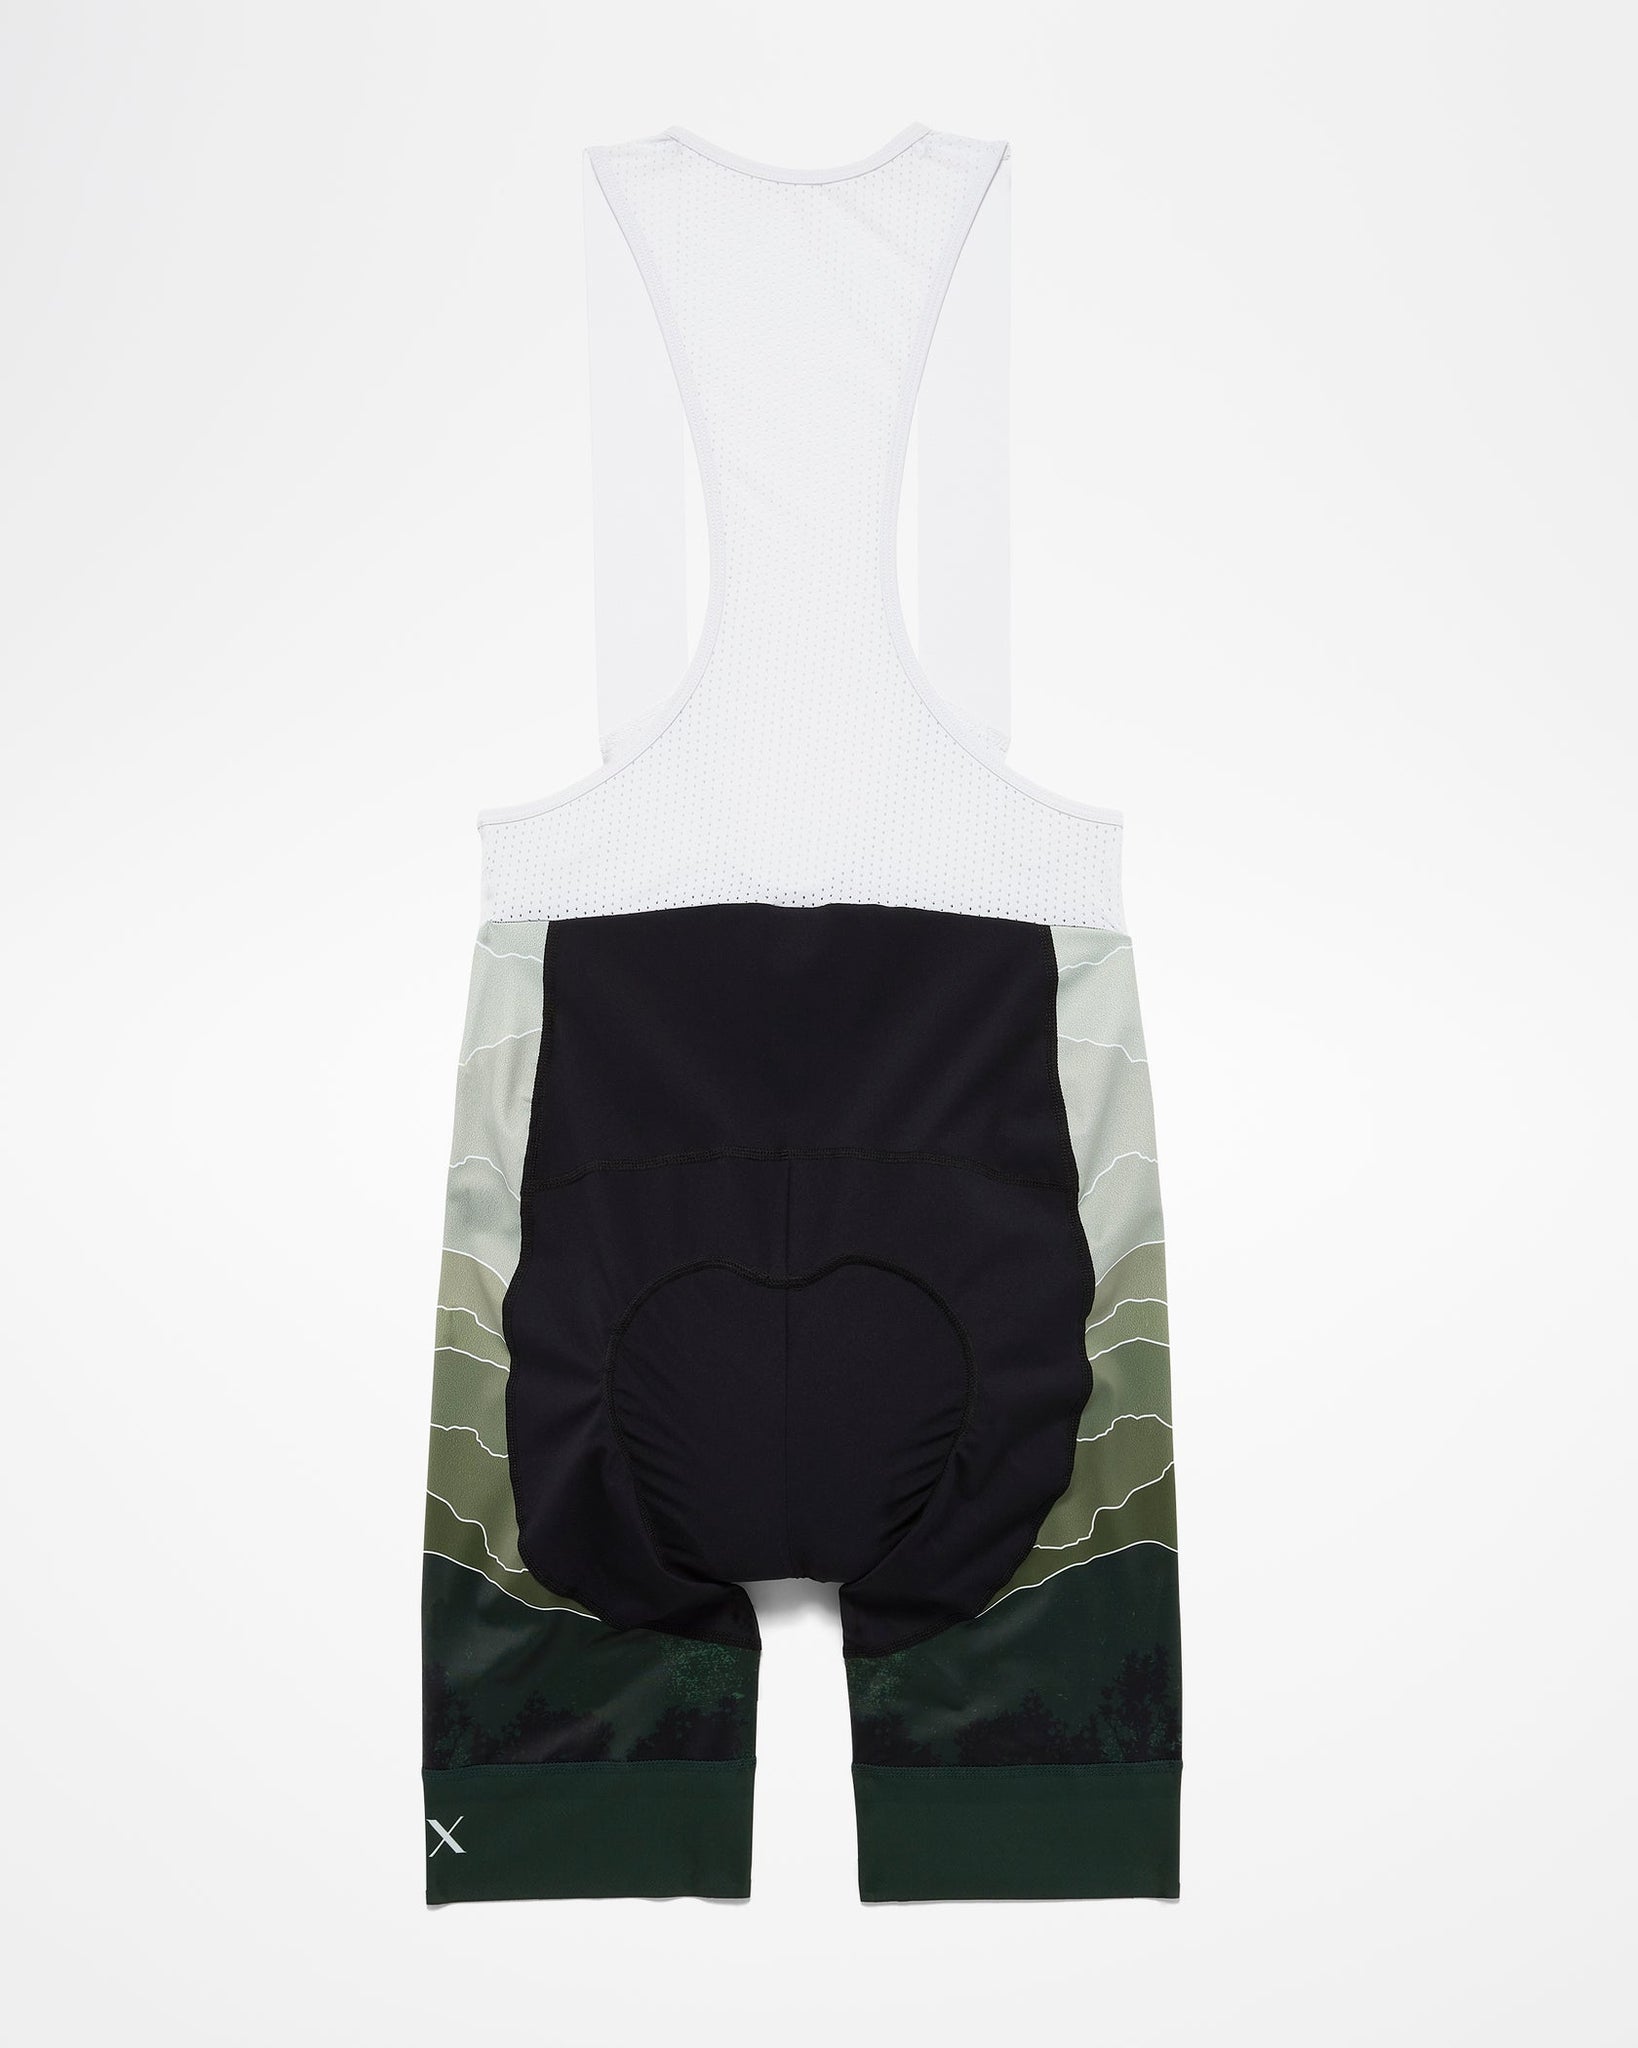 ASPENX Pedal Mafia Pro Team Men's Bib Shorts